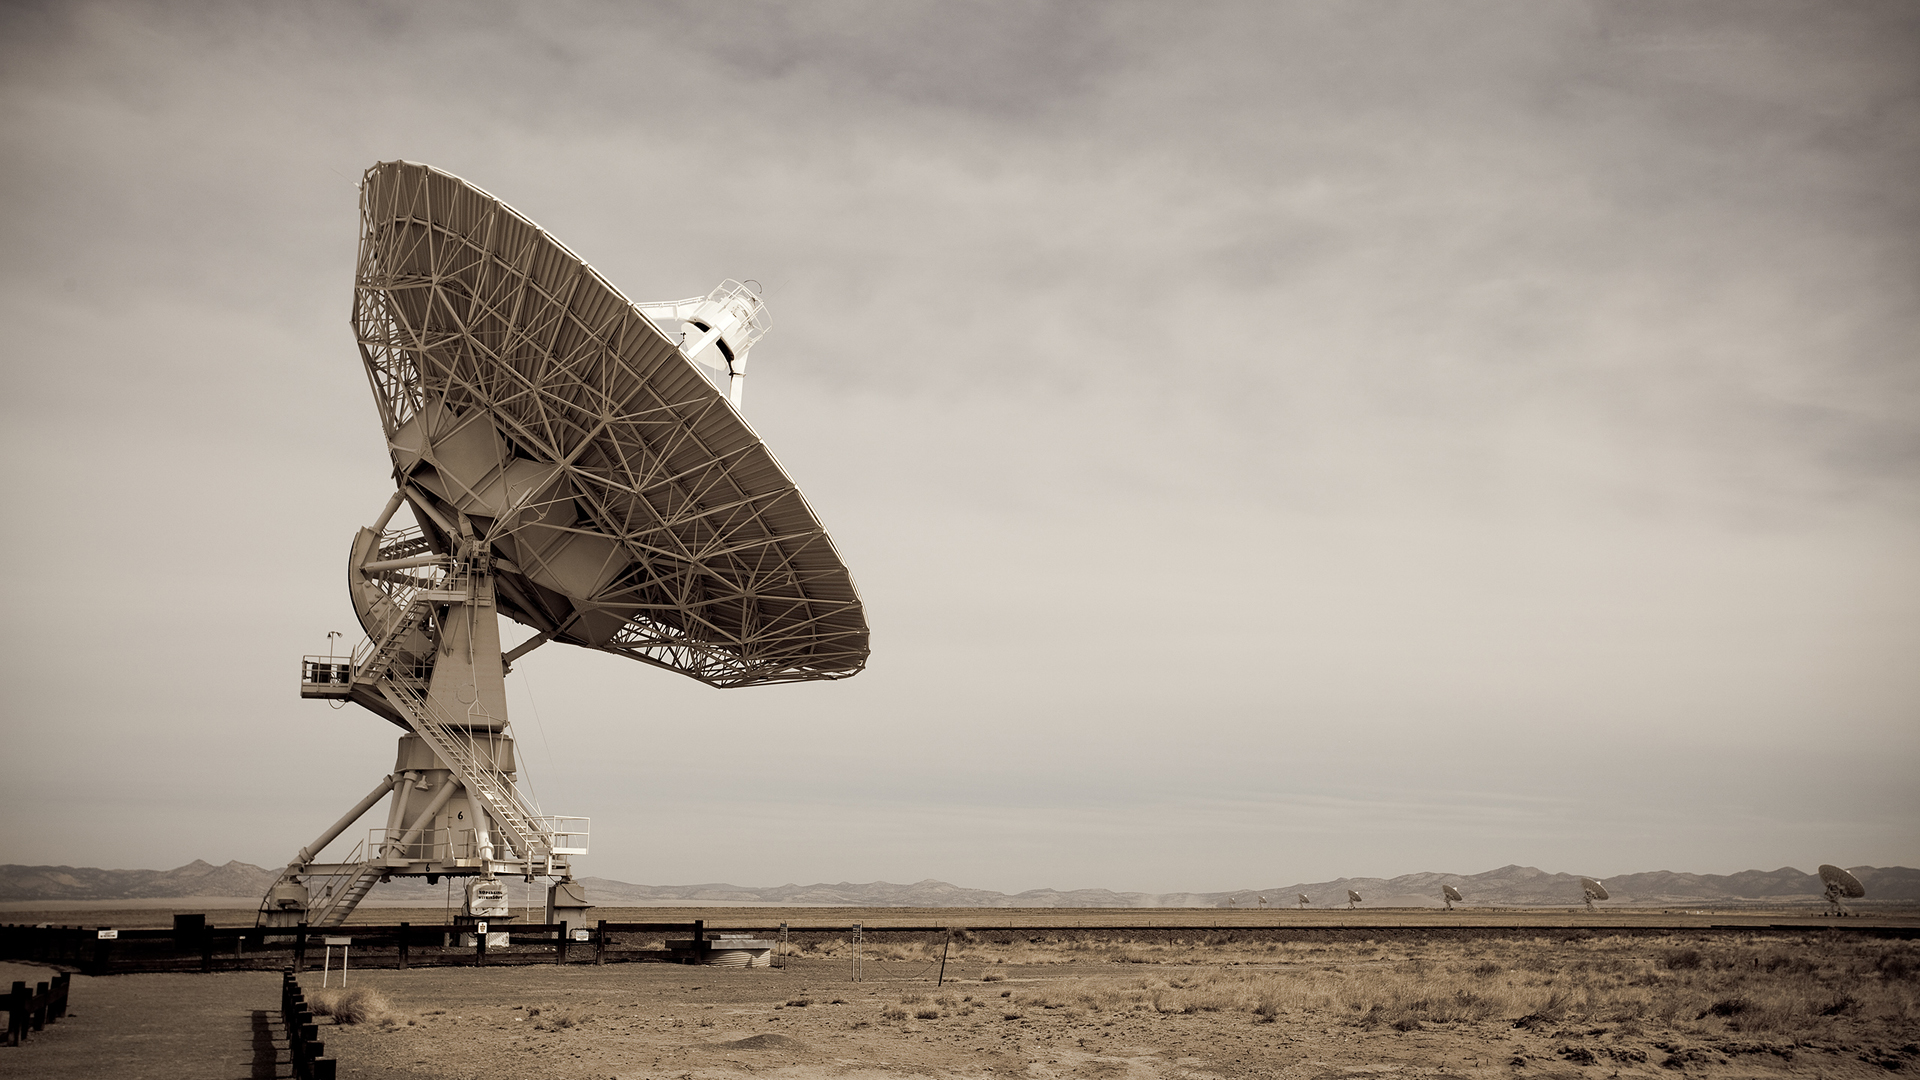 General 1920x1080 desert radio telescope technology sky